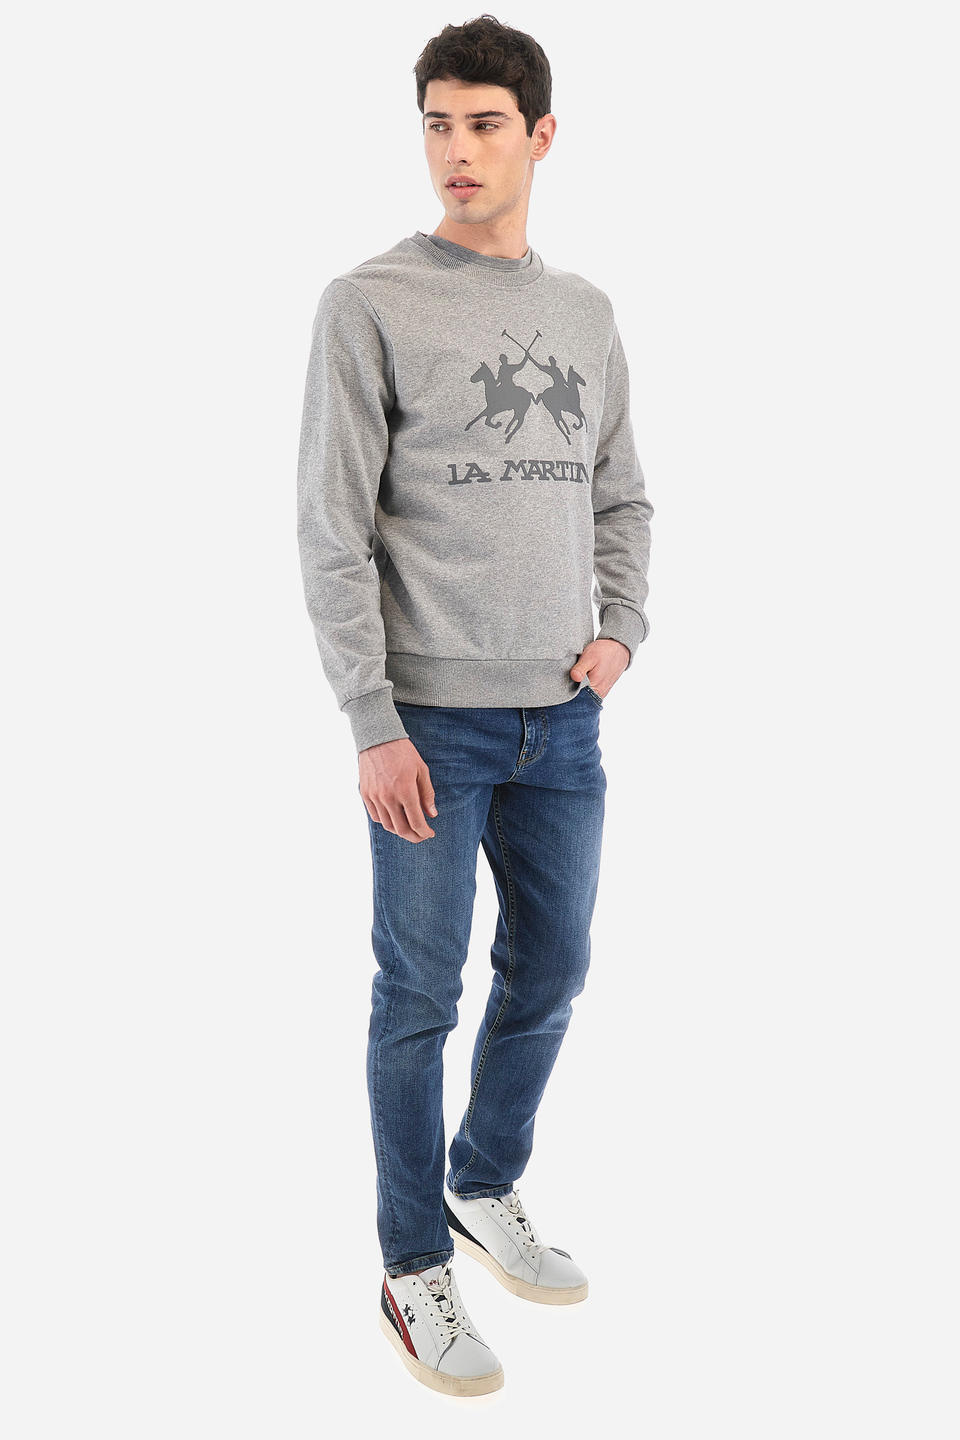 Regular-Fit-Pullover für Herren | La Martina - Official Online Shop